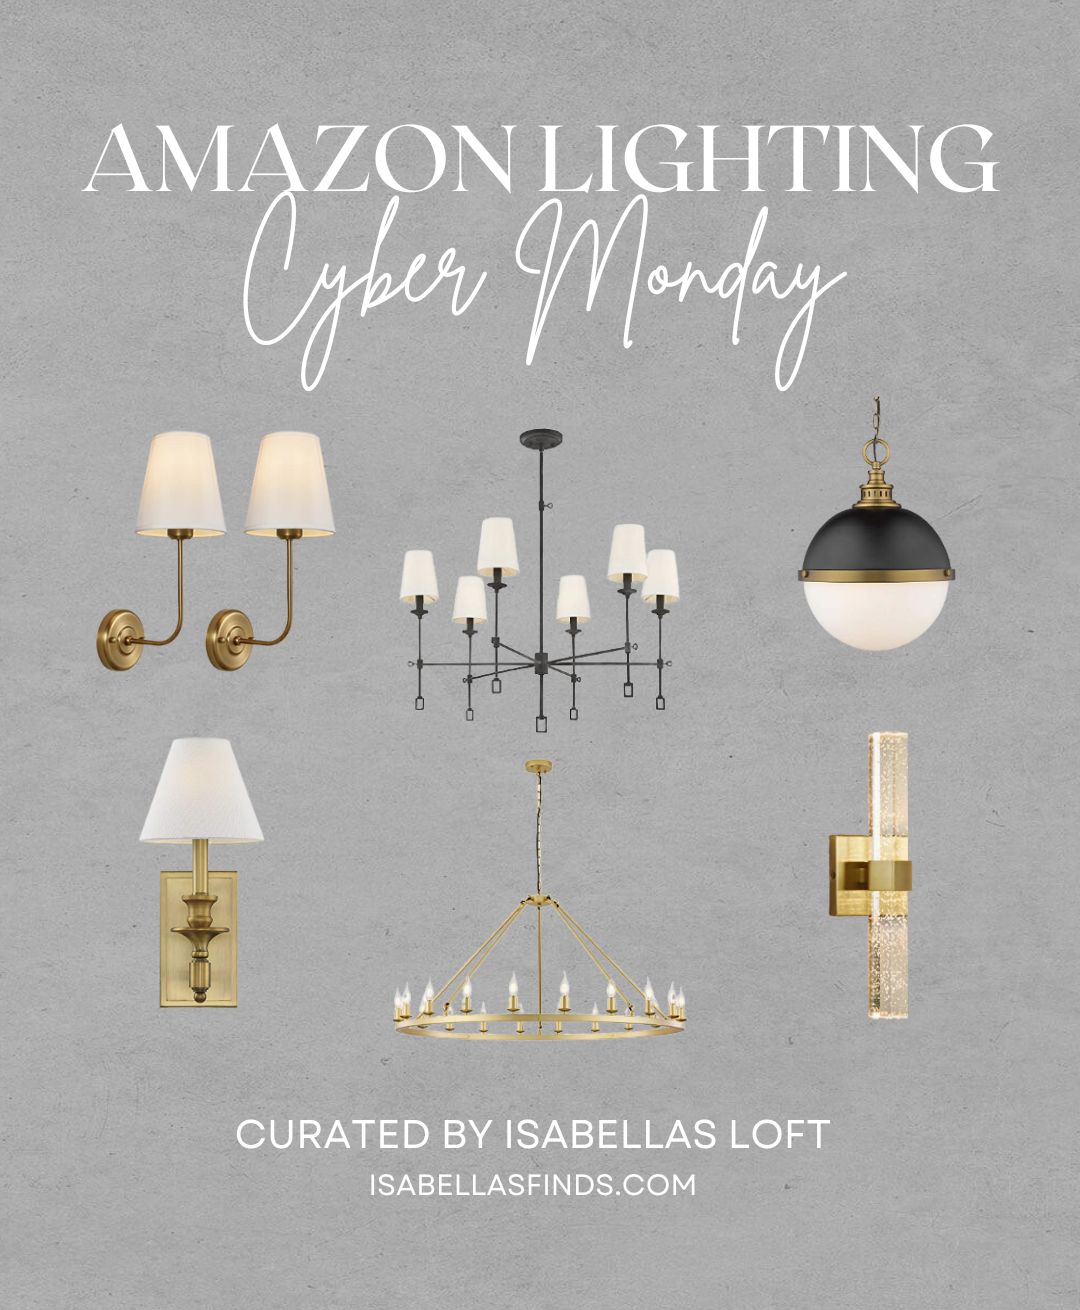 Isabella's Loft's Amazon Page | Amazon (US)